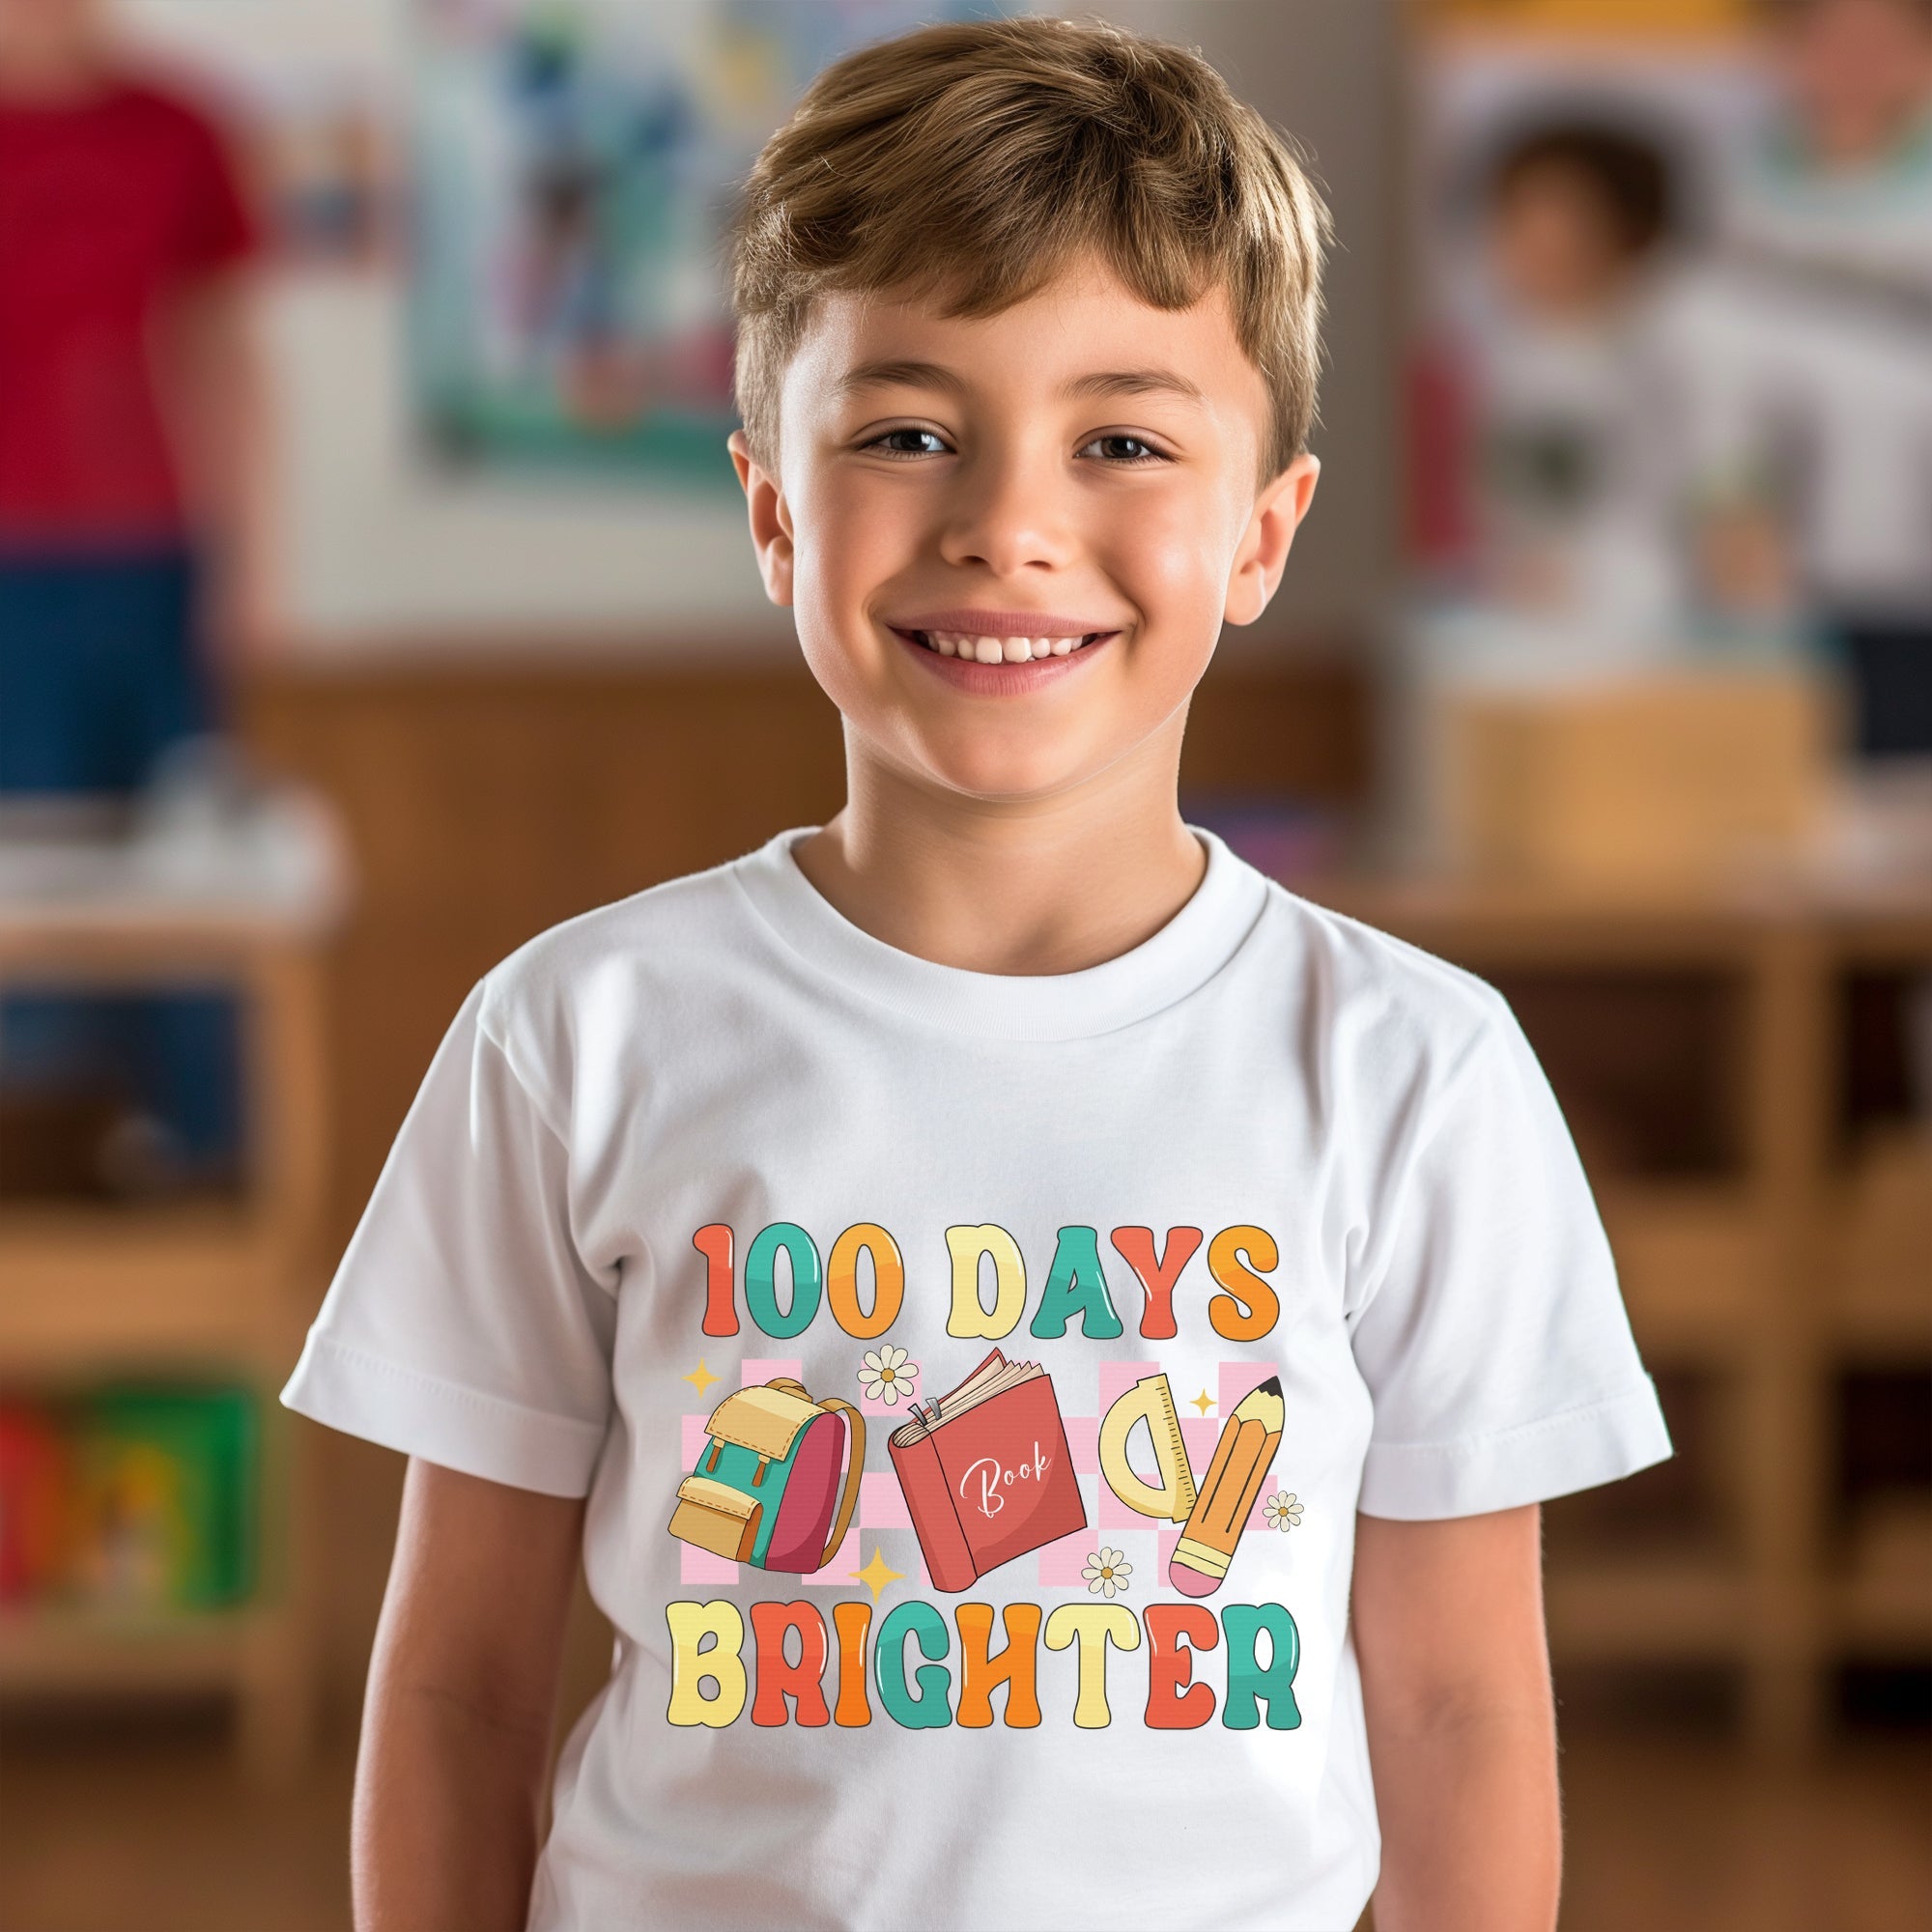 100 Days of School Kids T-Shirt 1185